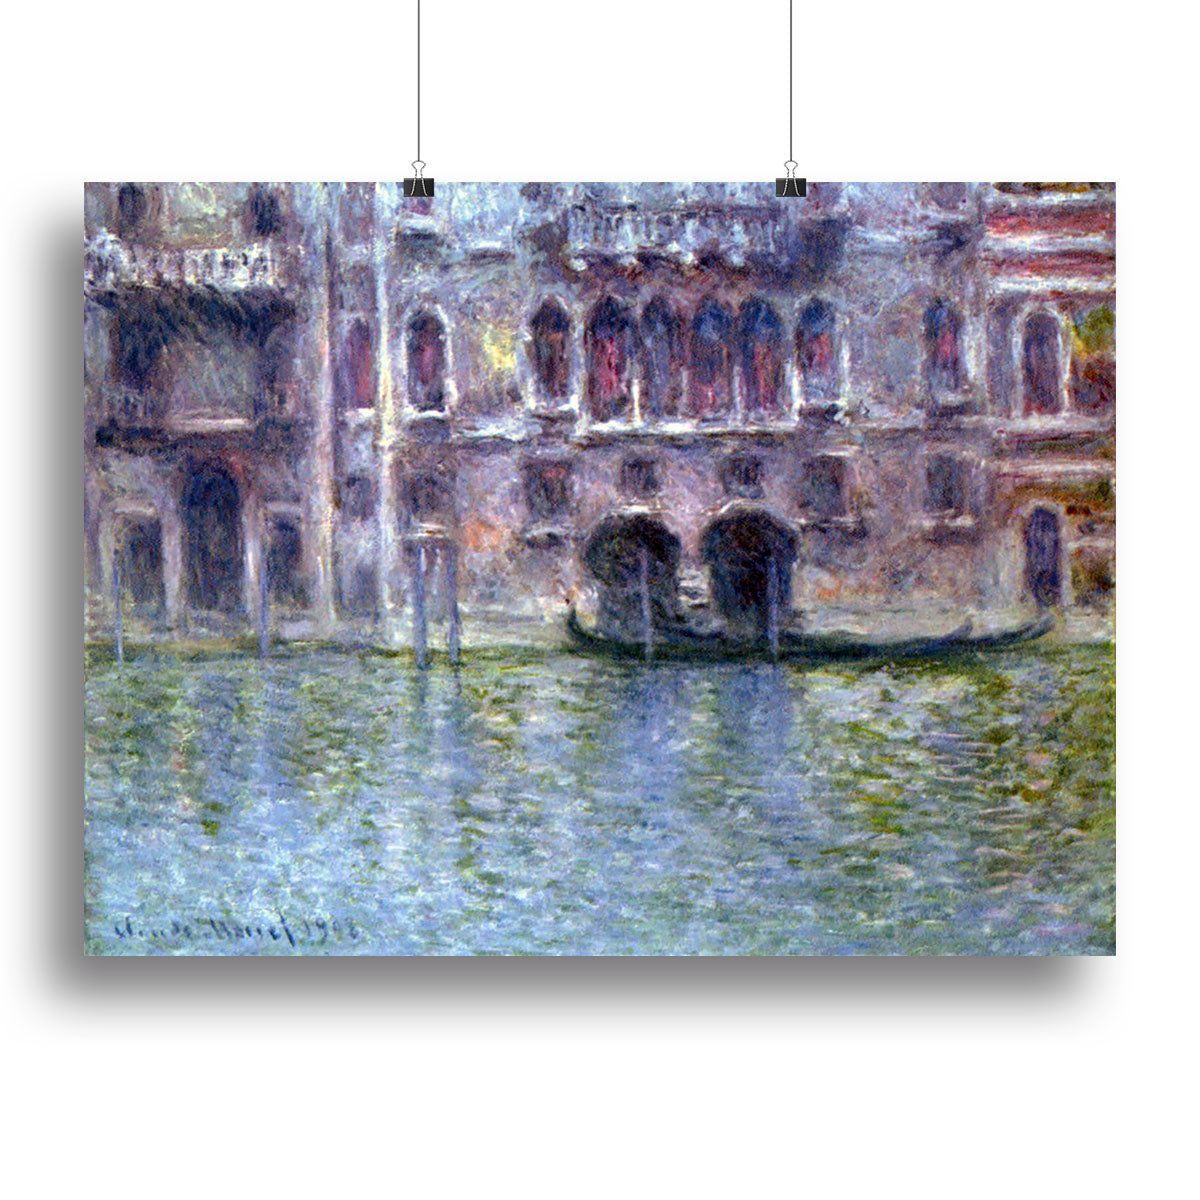 Palazzo da Mula Venice by Monet Canvas Print or Poster - Canvas Art Rocks - 2